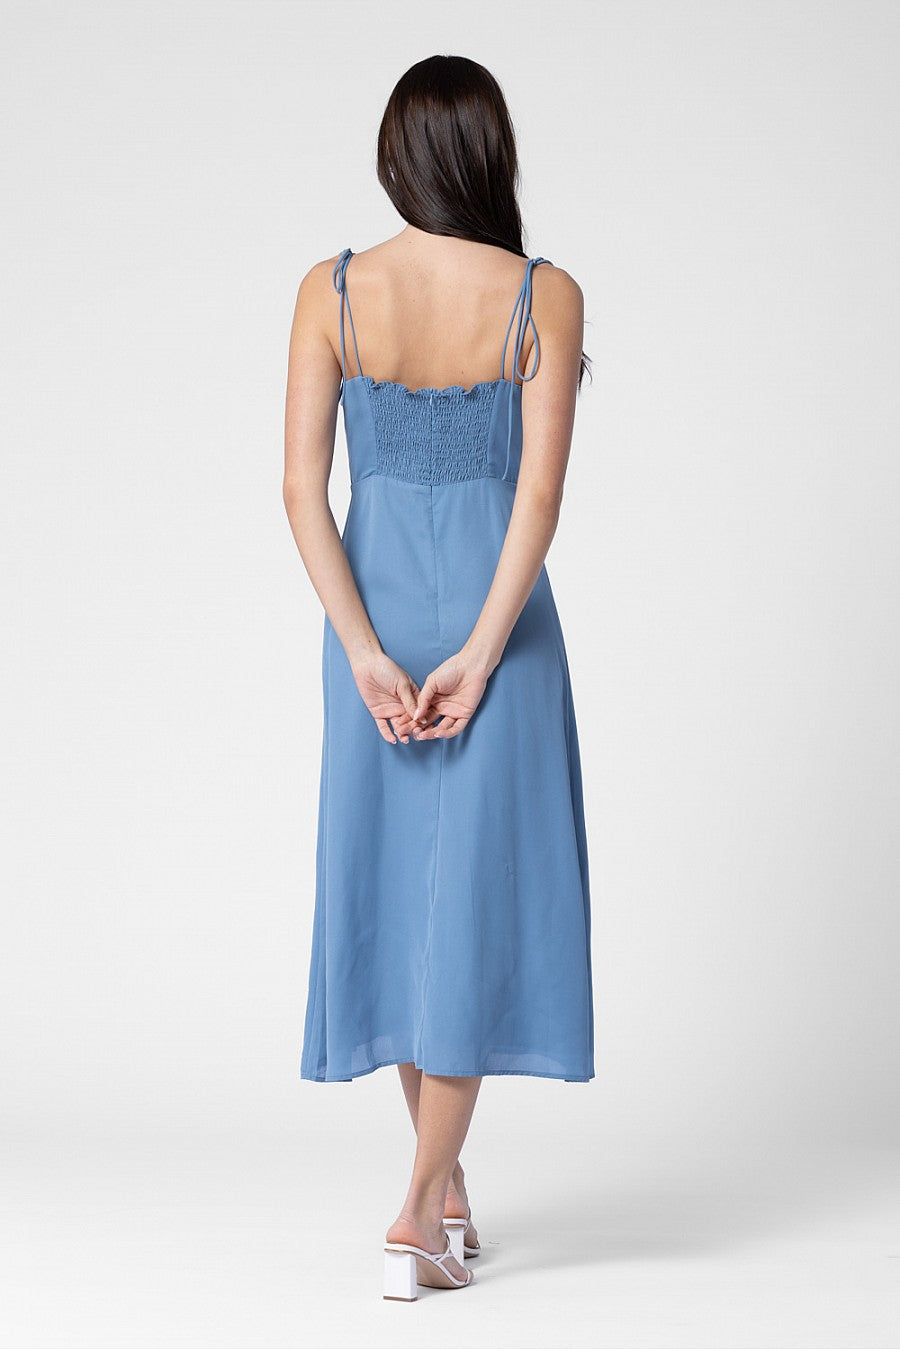 something blue midi dress